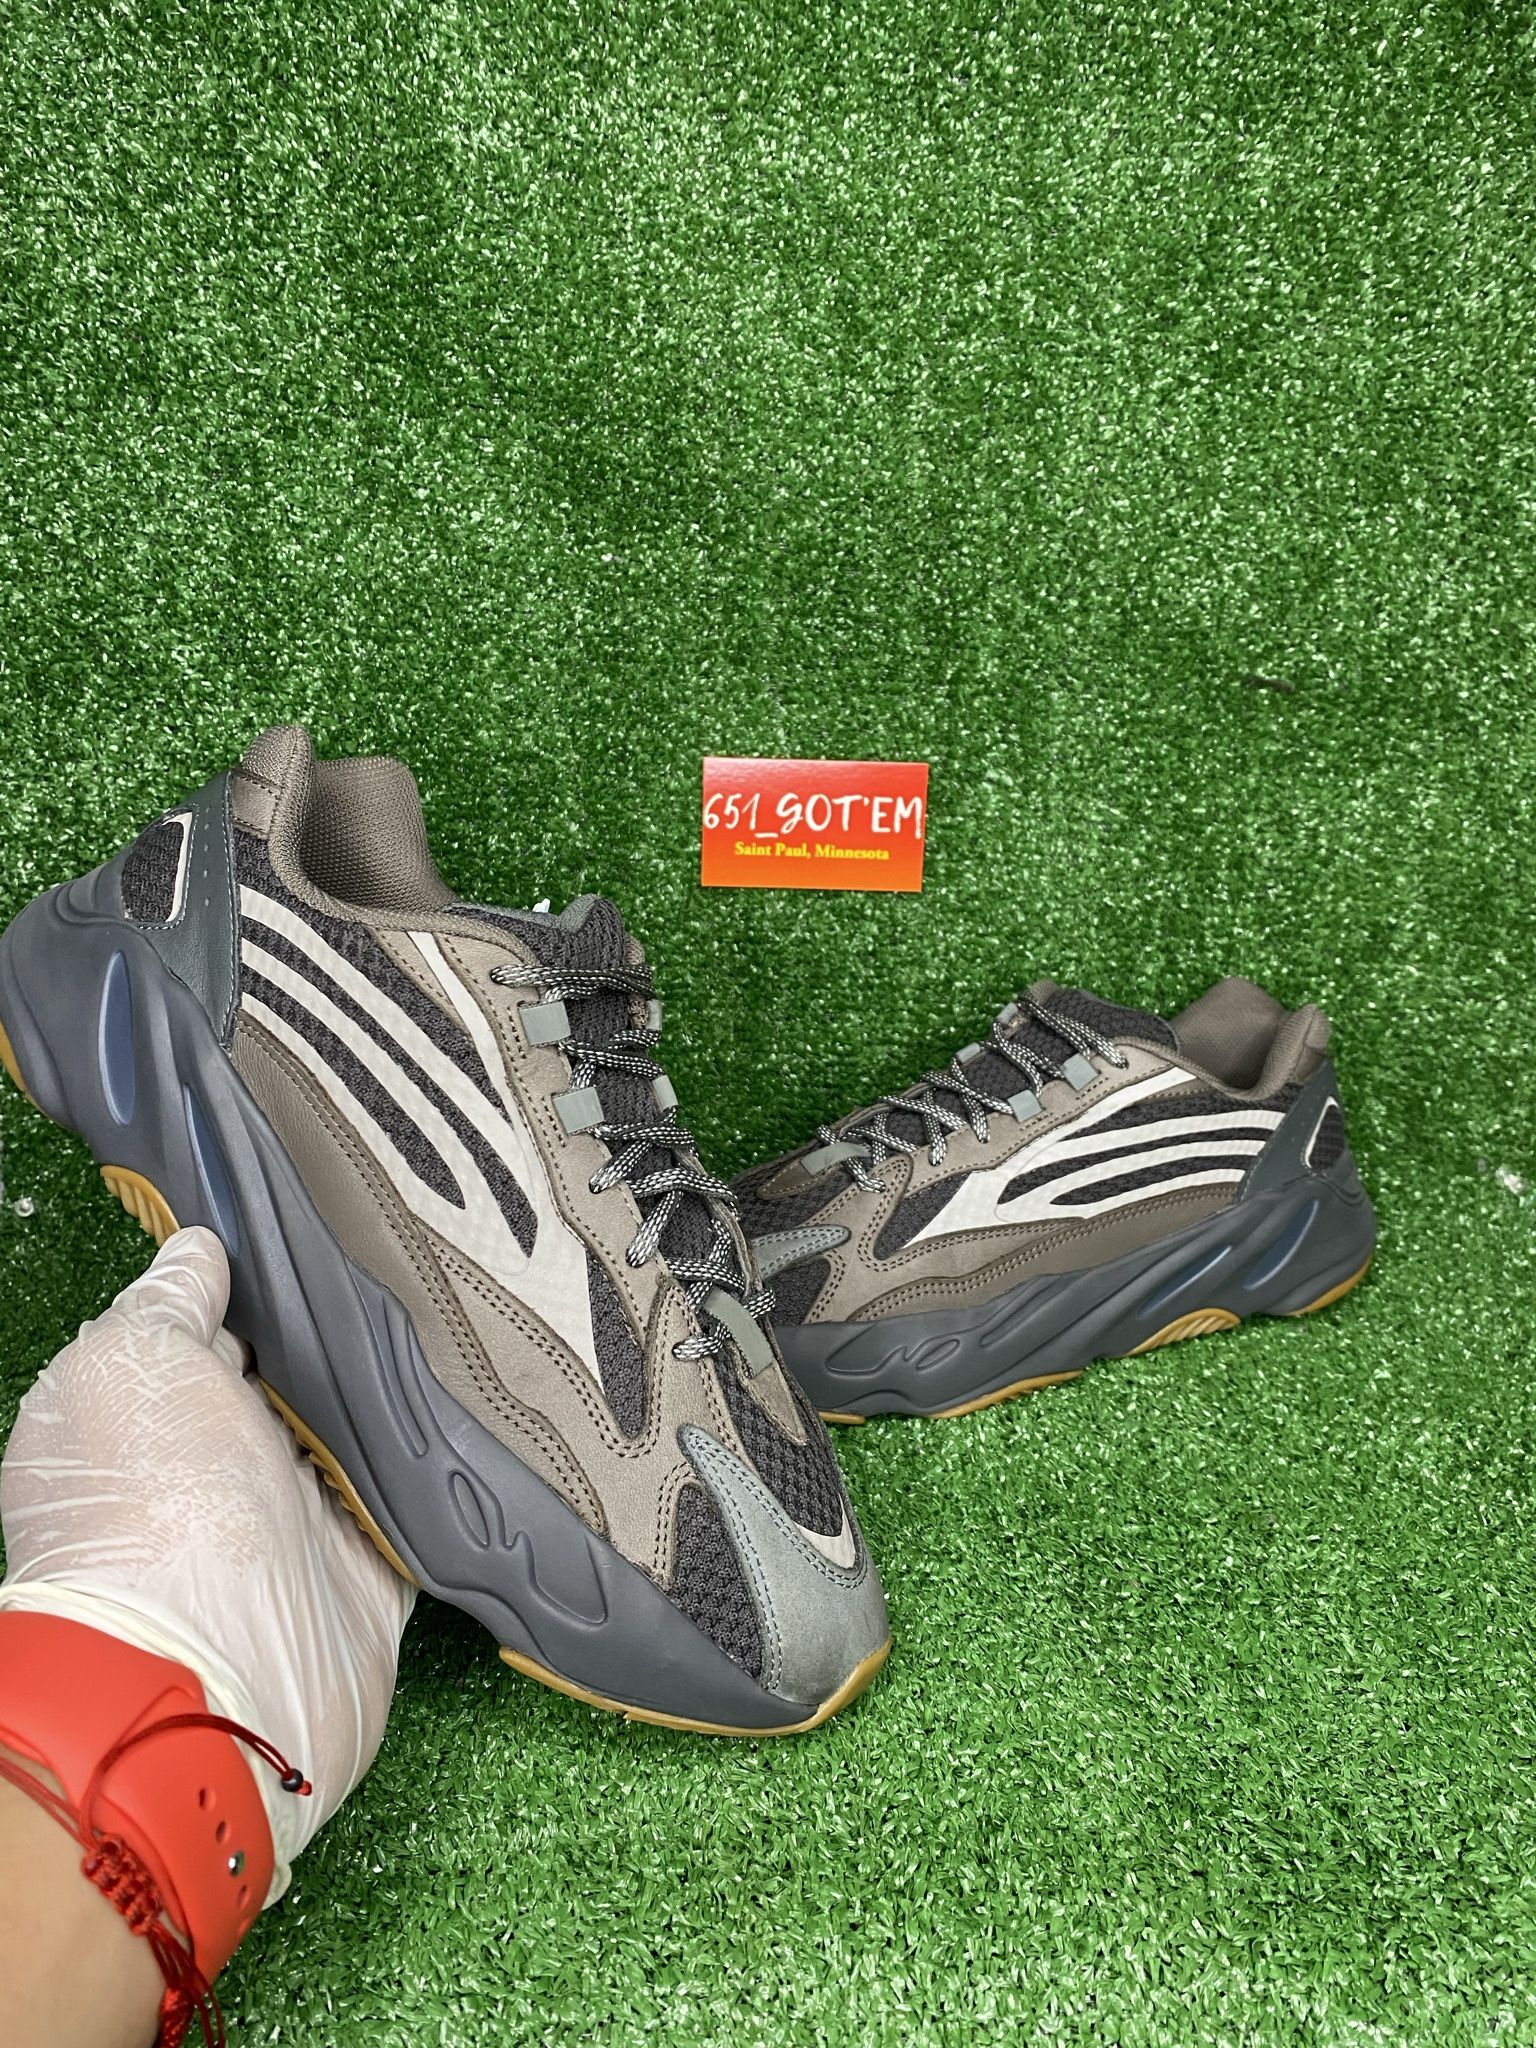 Adidas Yeezy Boost 700 V2 “GEODE”